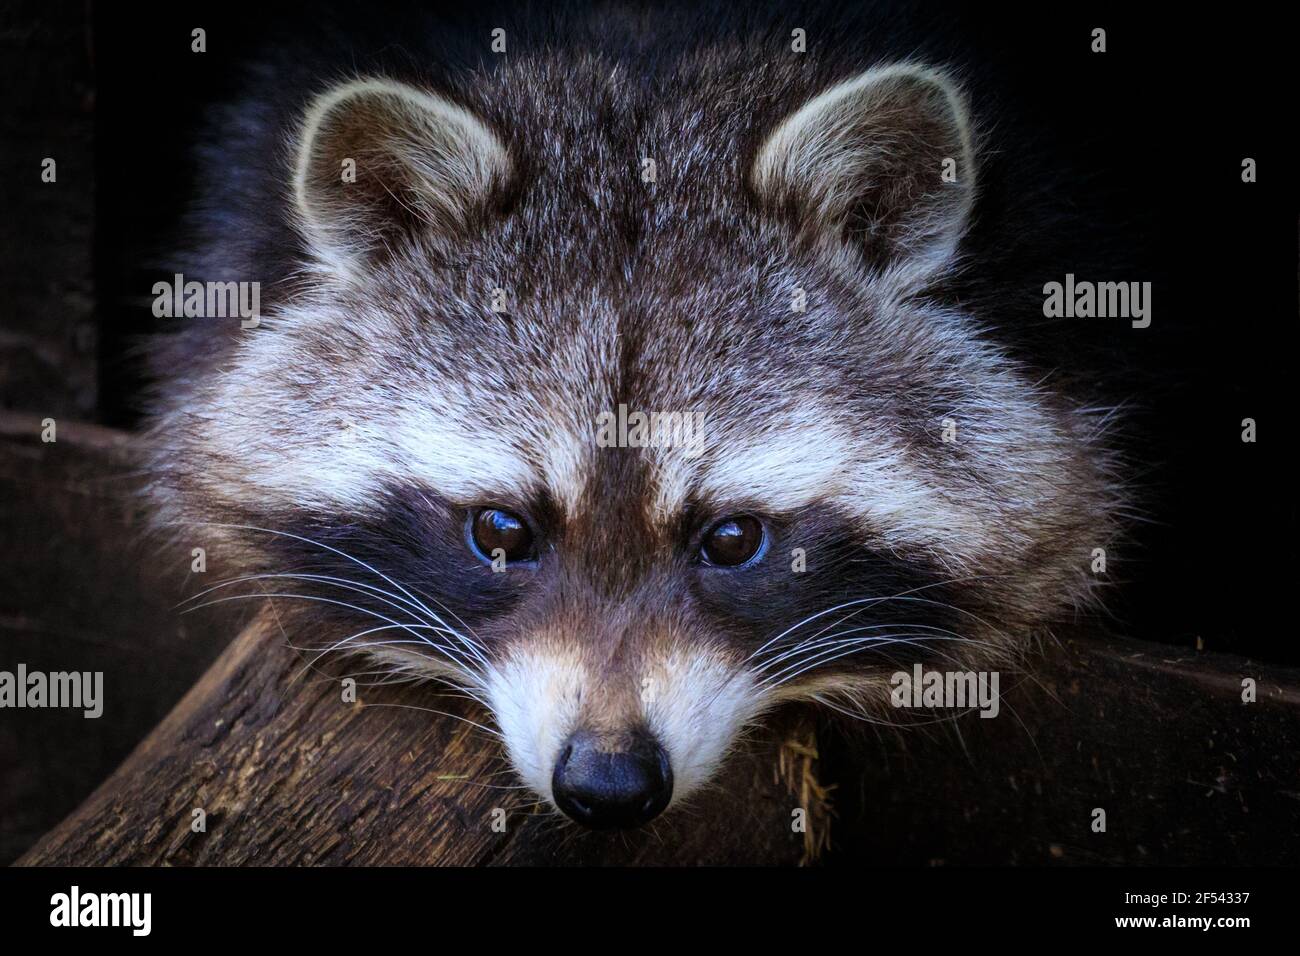 Raccoon (Procyon lotor), close up of face, looking at camera Stock Photo